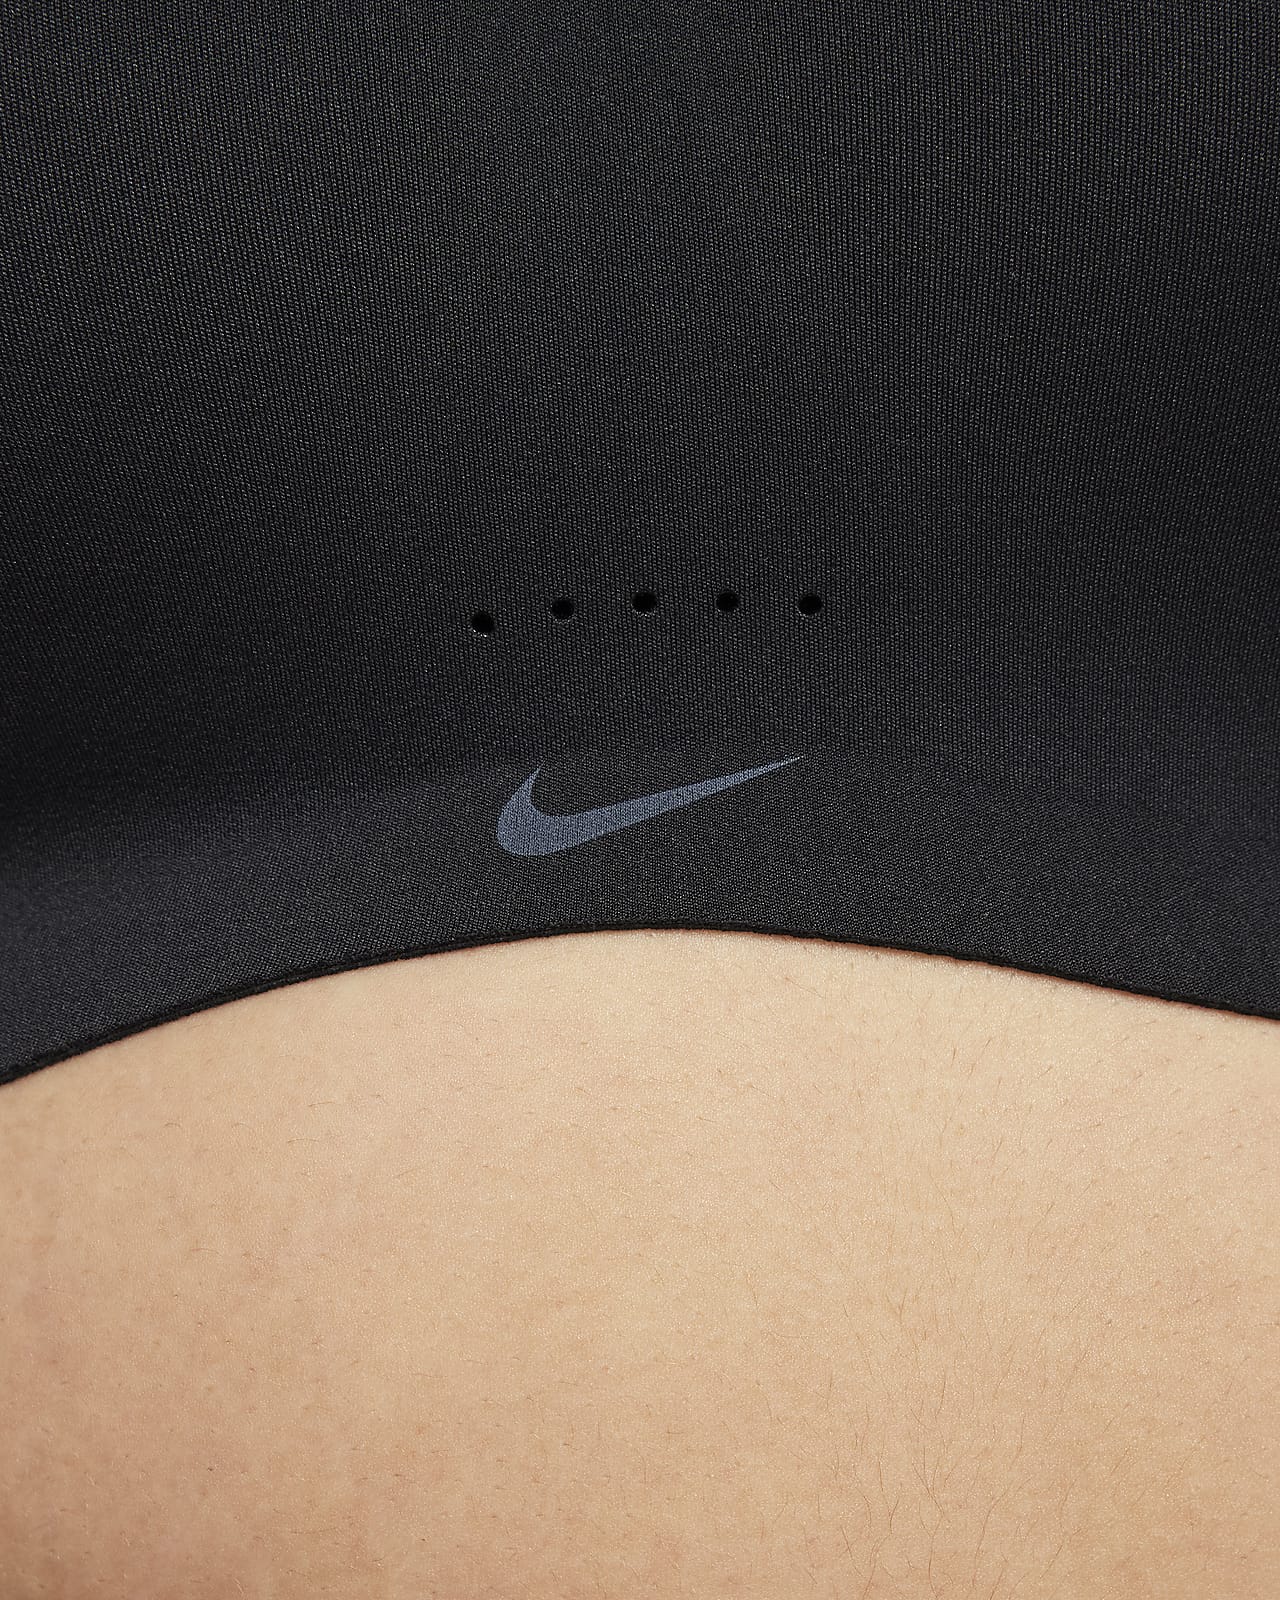 Nike Alate Minimalist Women's Light-Support Padded Sports Bra.